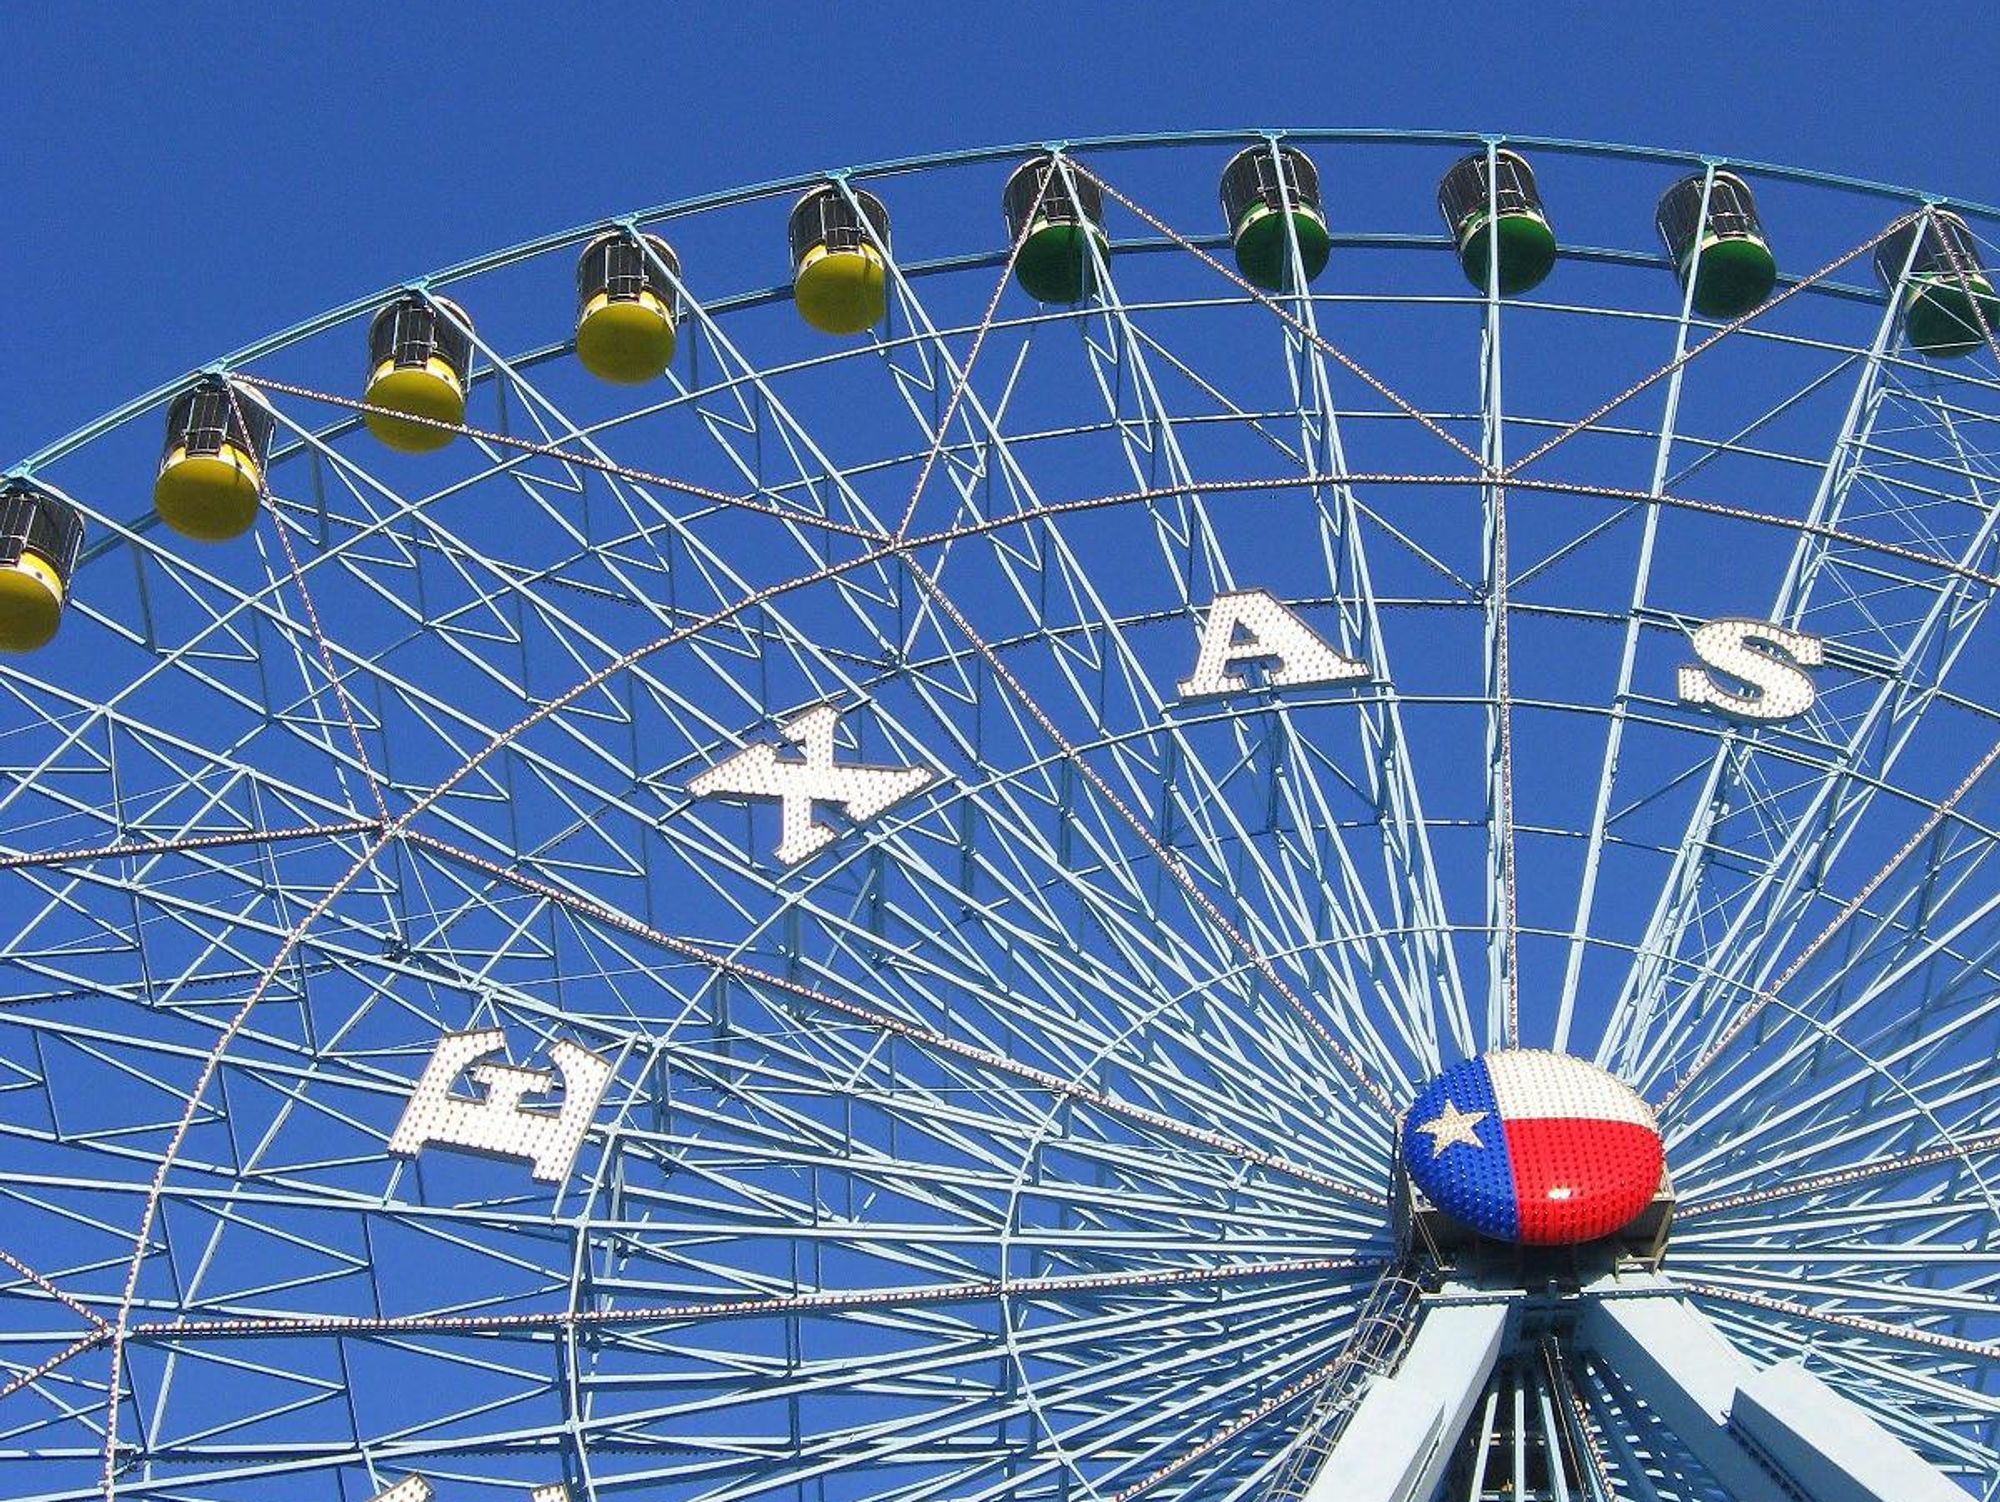 Texas Star Ferris wheel